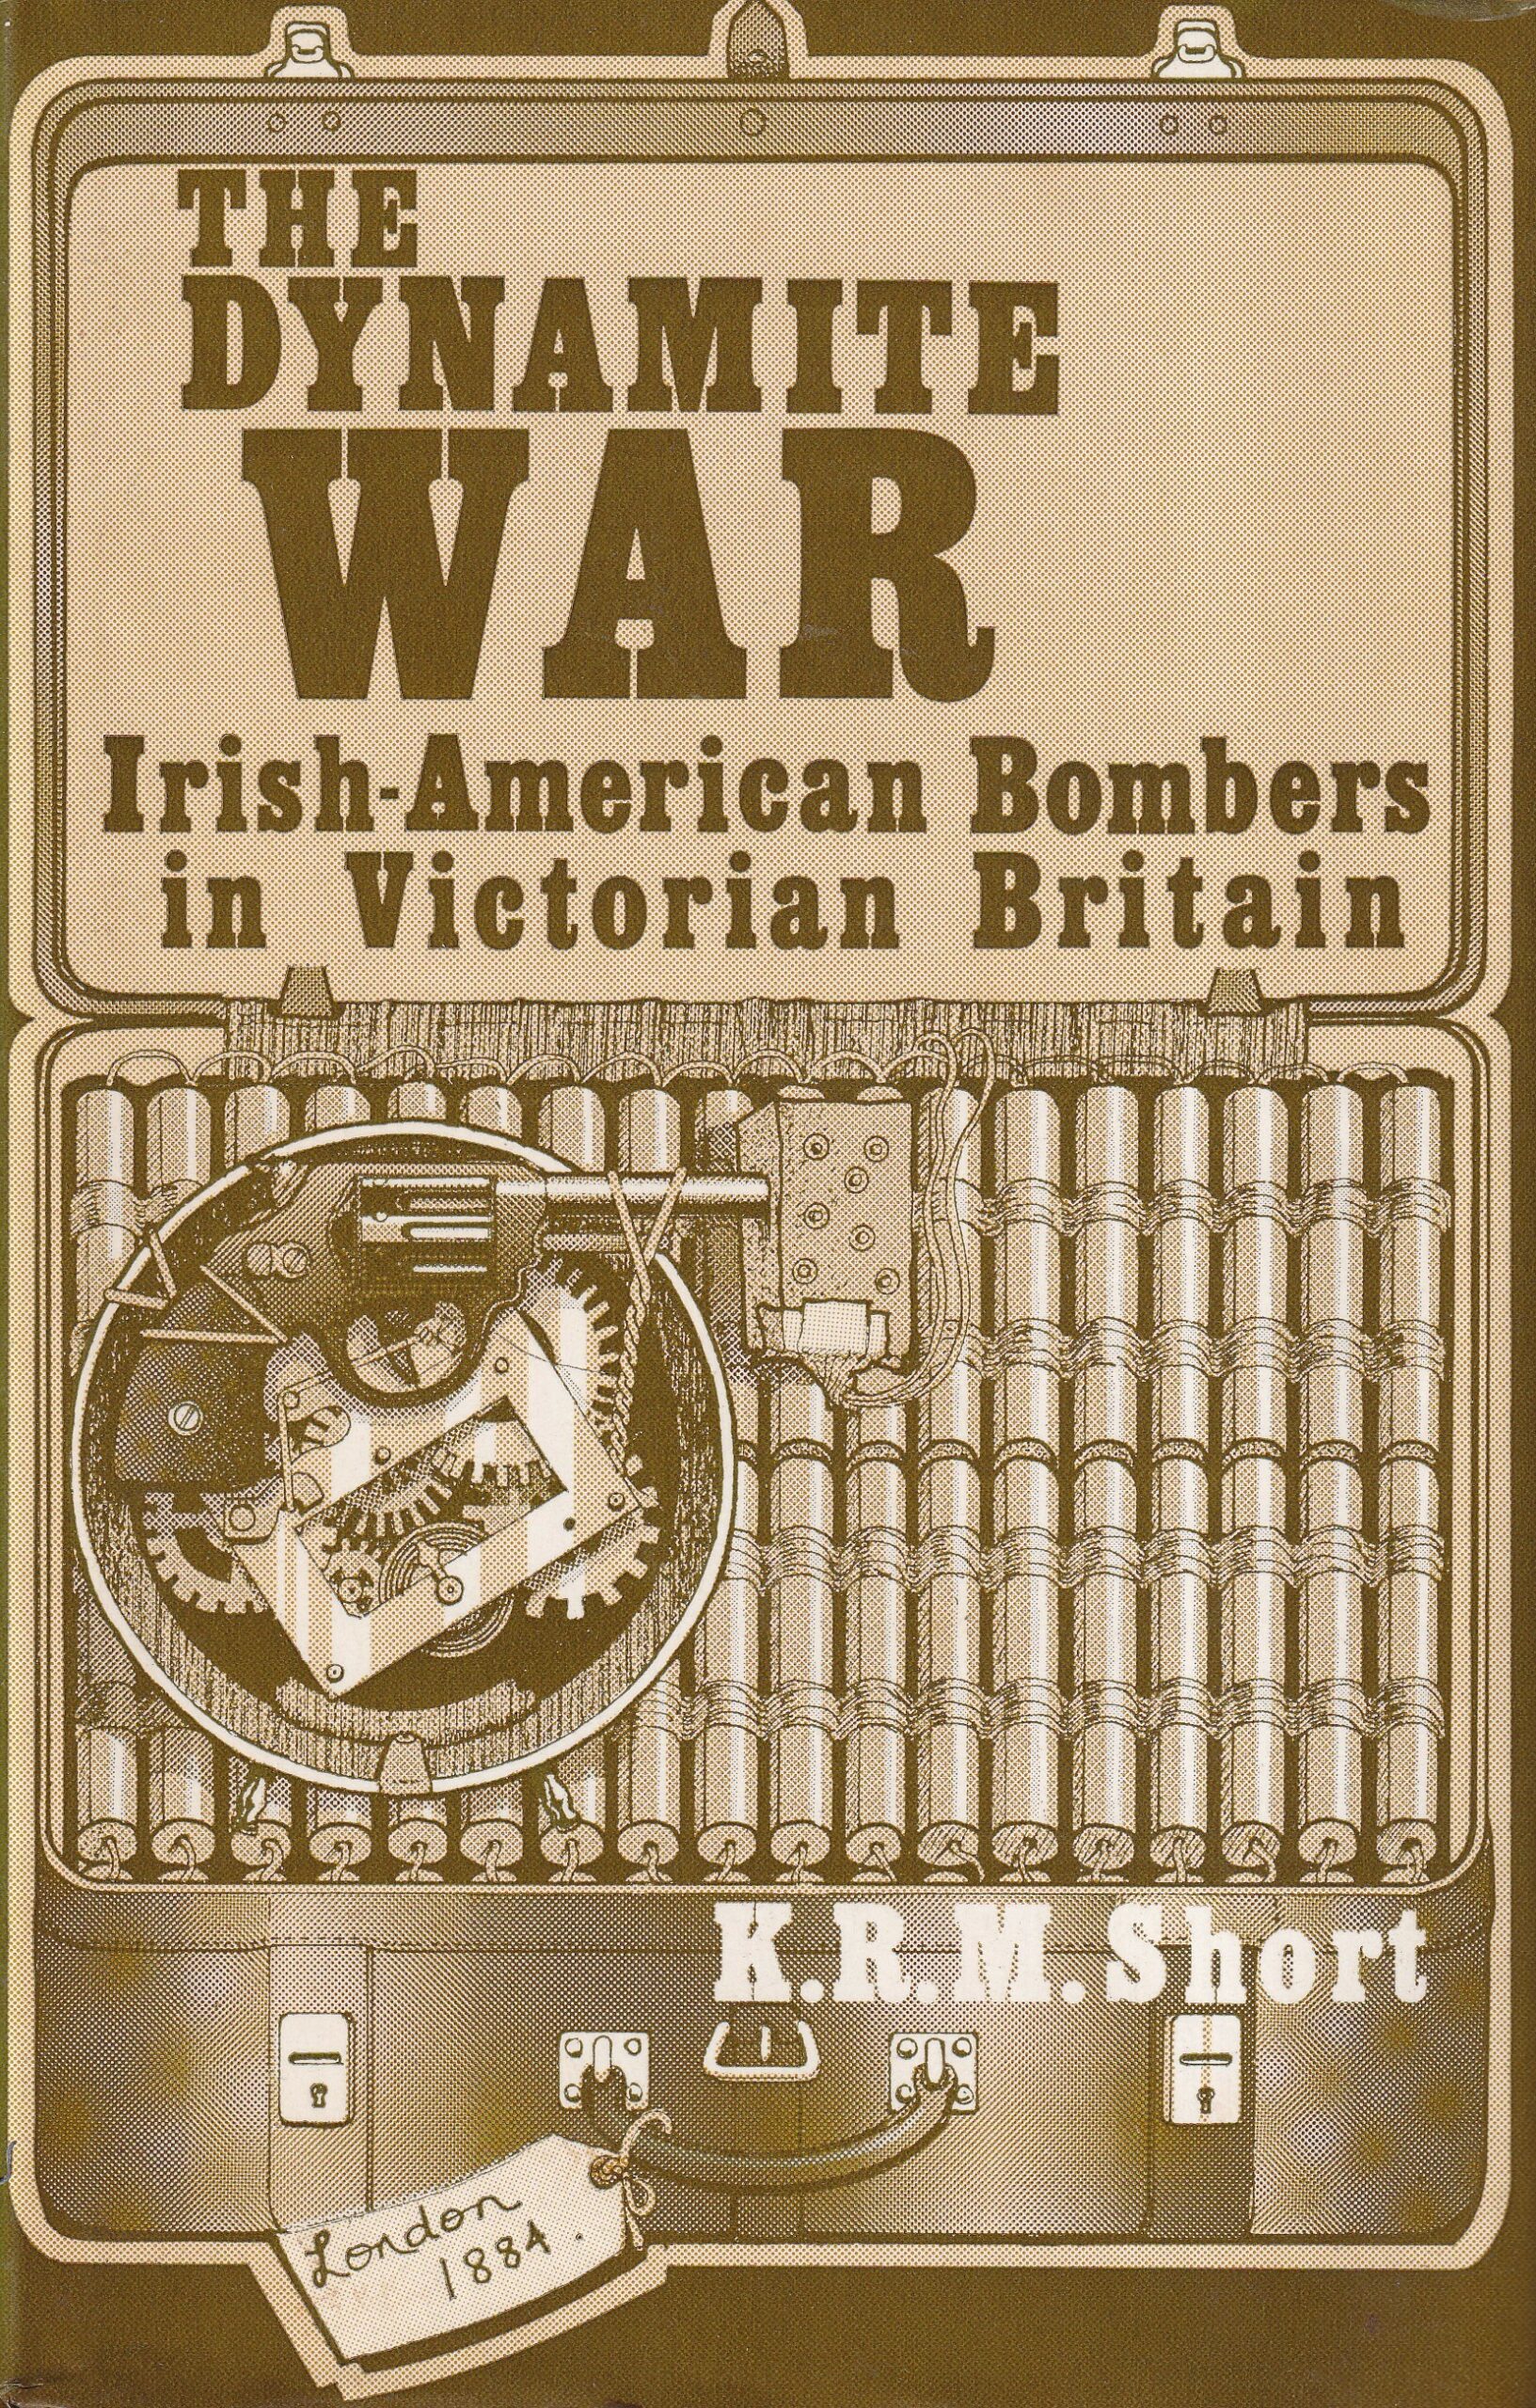 The Dynamite War: Irish-American Bombers in Victorian Britain | K.R.M. Short | Charlie Byrne's